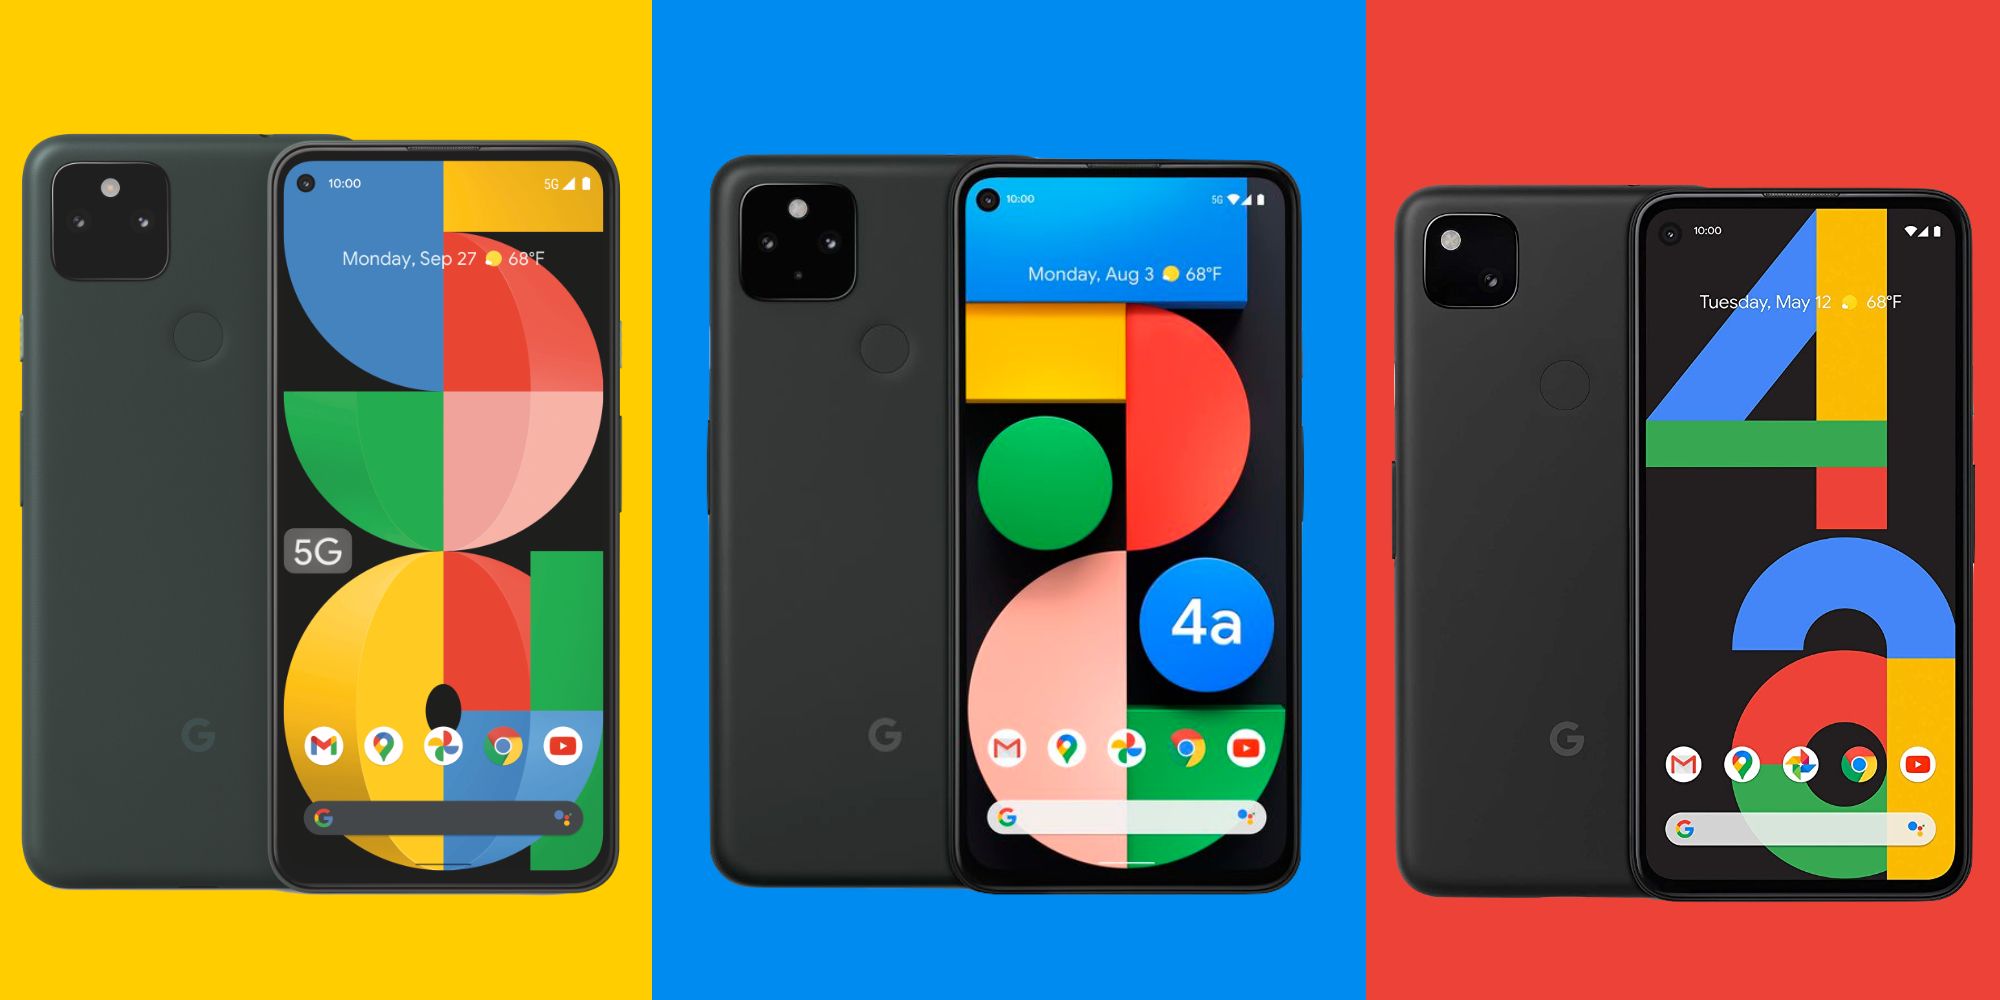 Google Pixel 5a, 4a 5G, and 4a